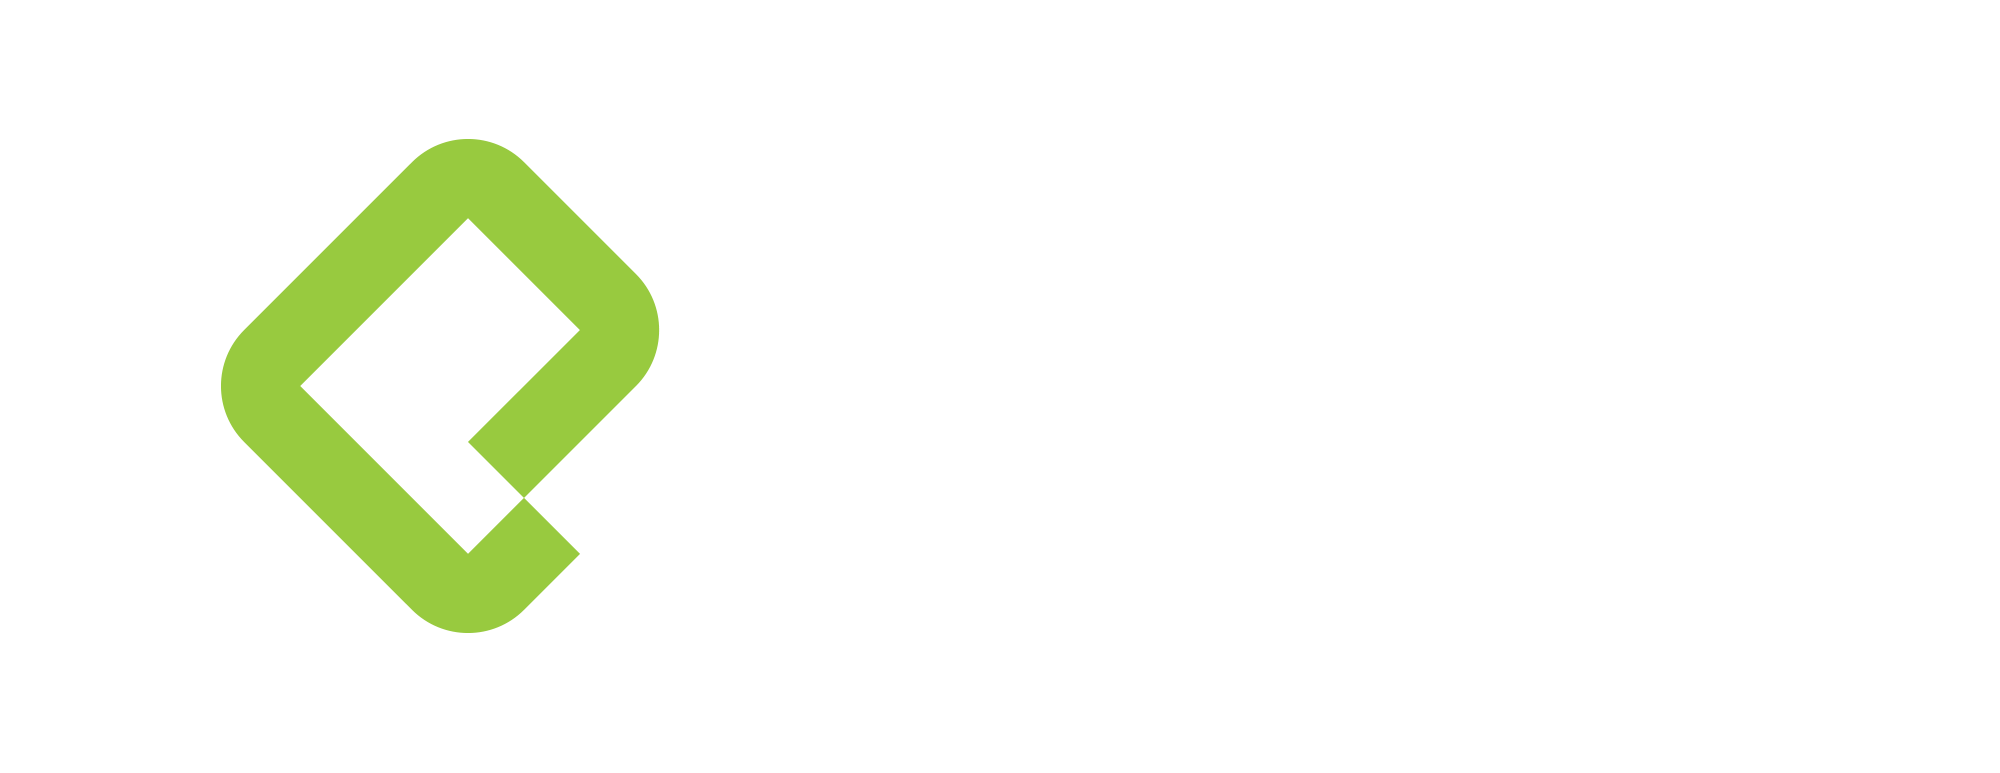 platzi_logo